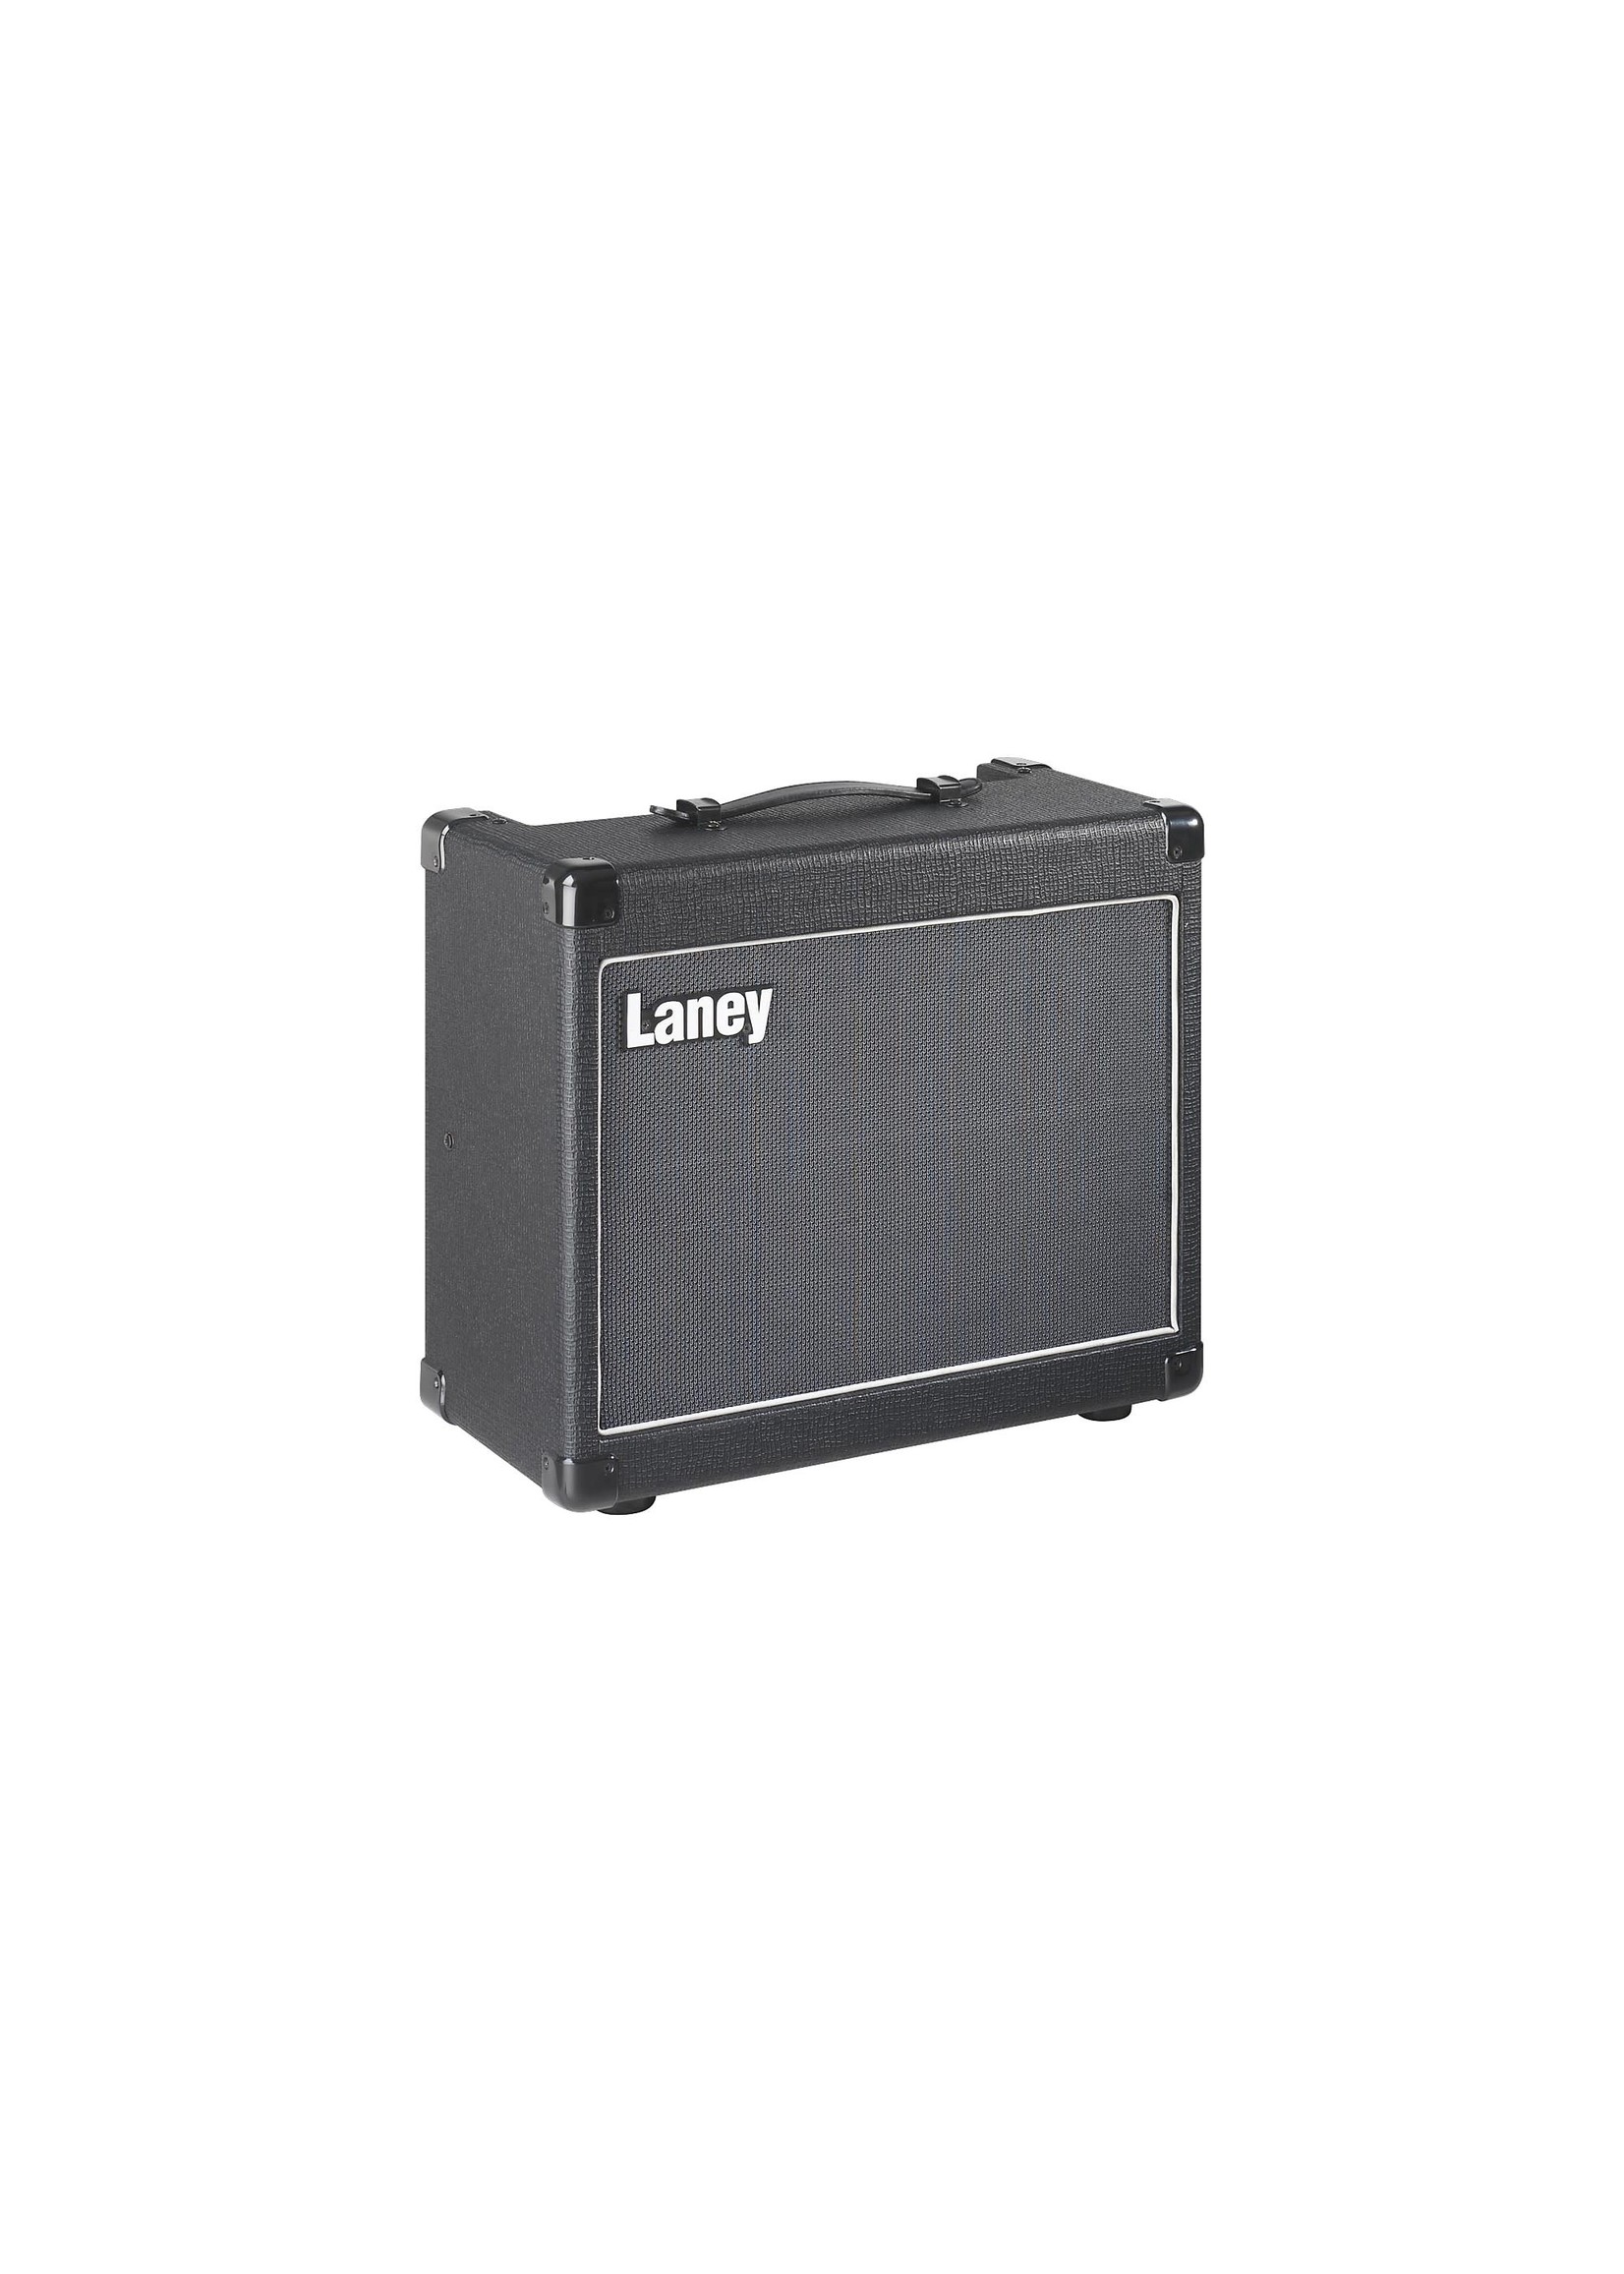 Laney Laney LG35R 30W 1x10 Guitar Combo Amp Black